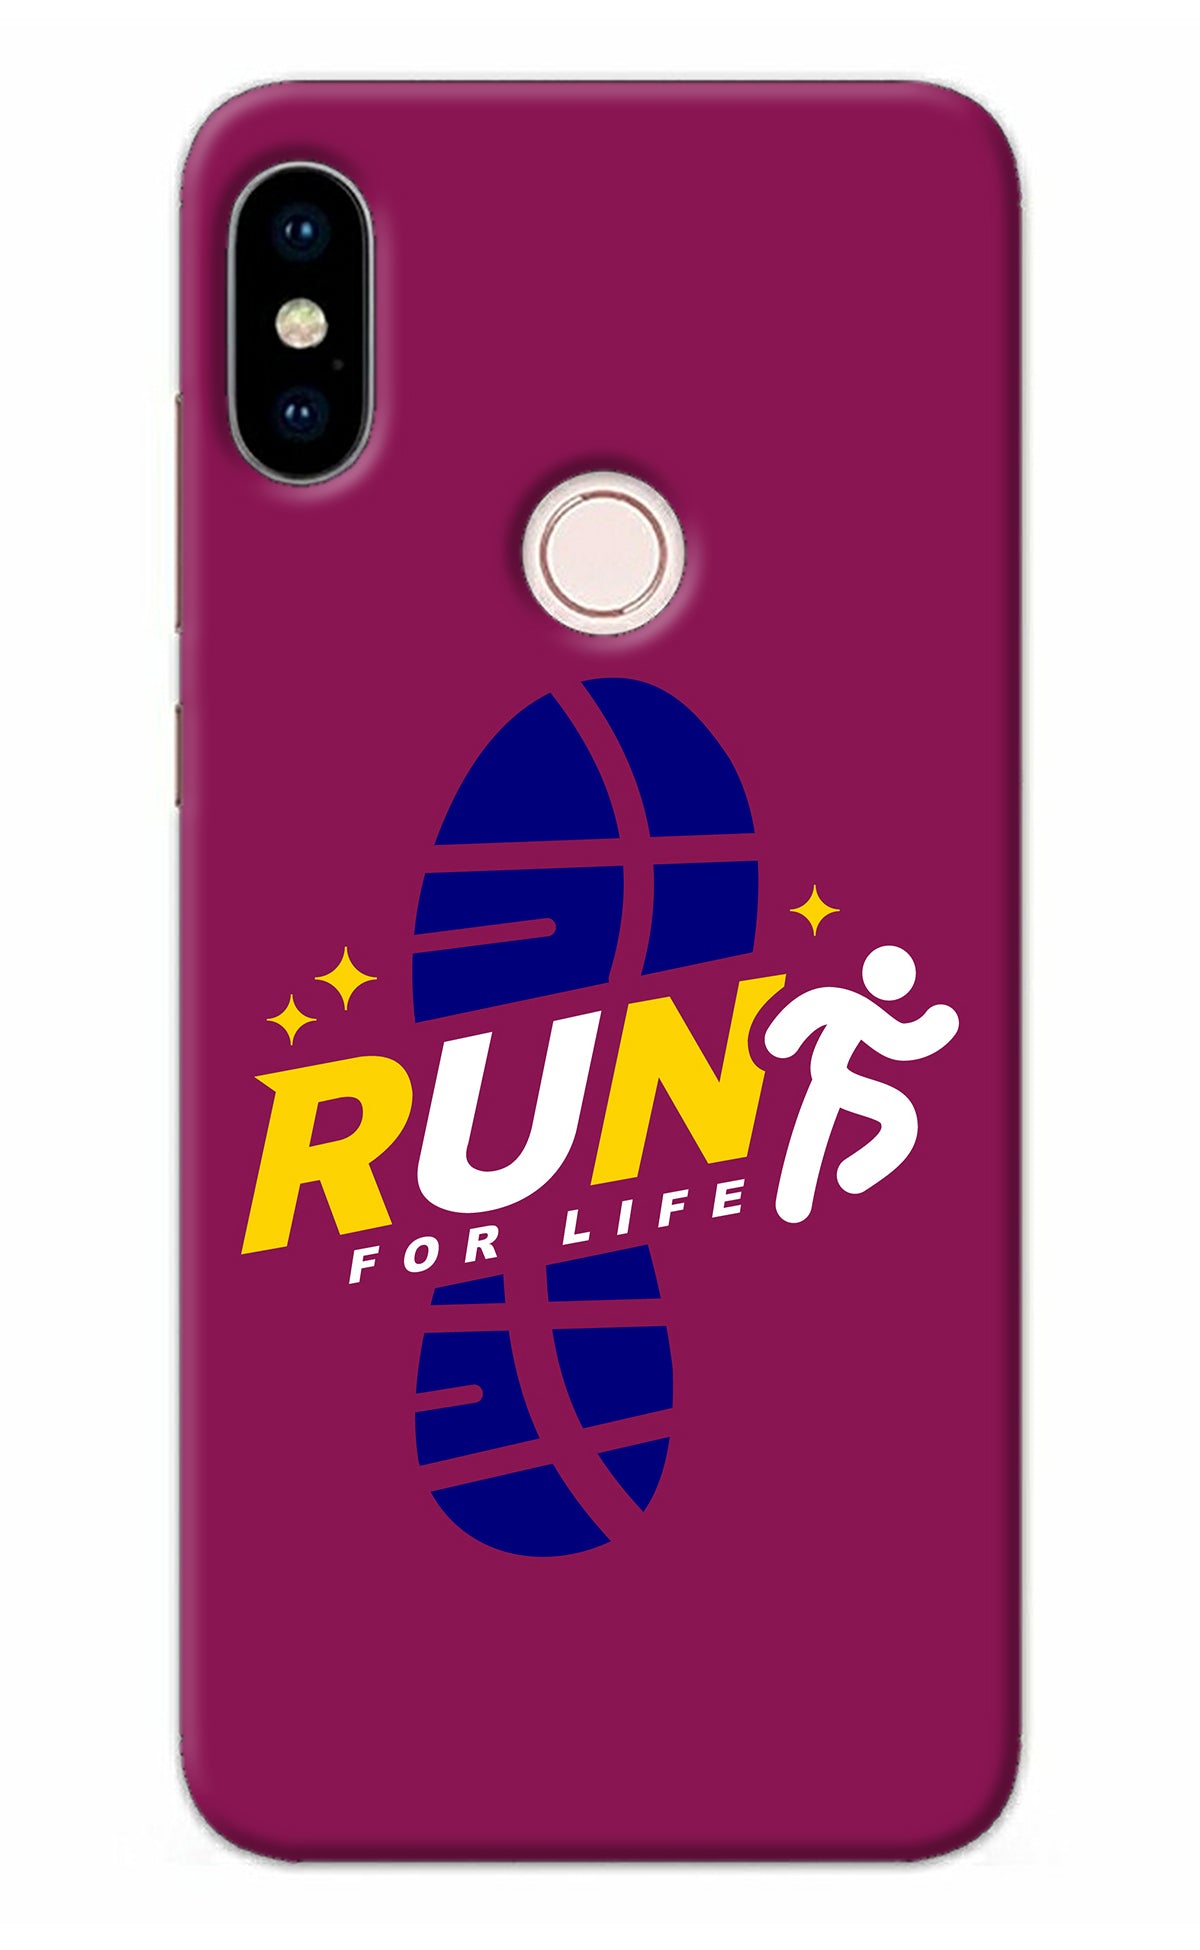 Run for Life Redmi Note 5 Pro Back Cover